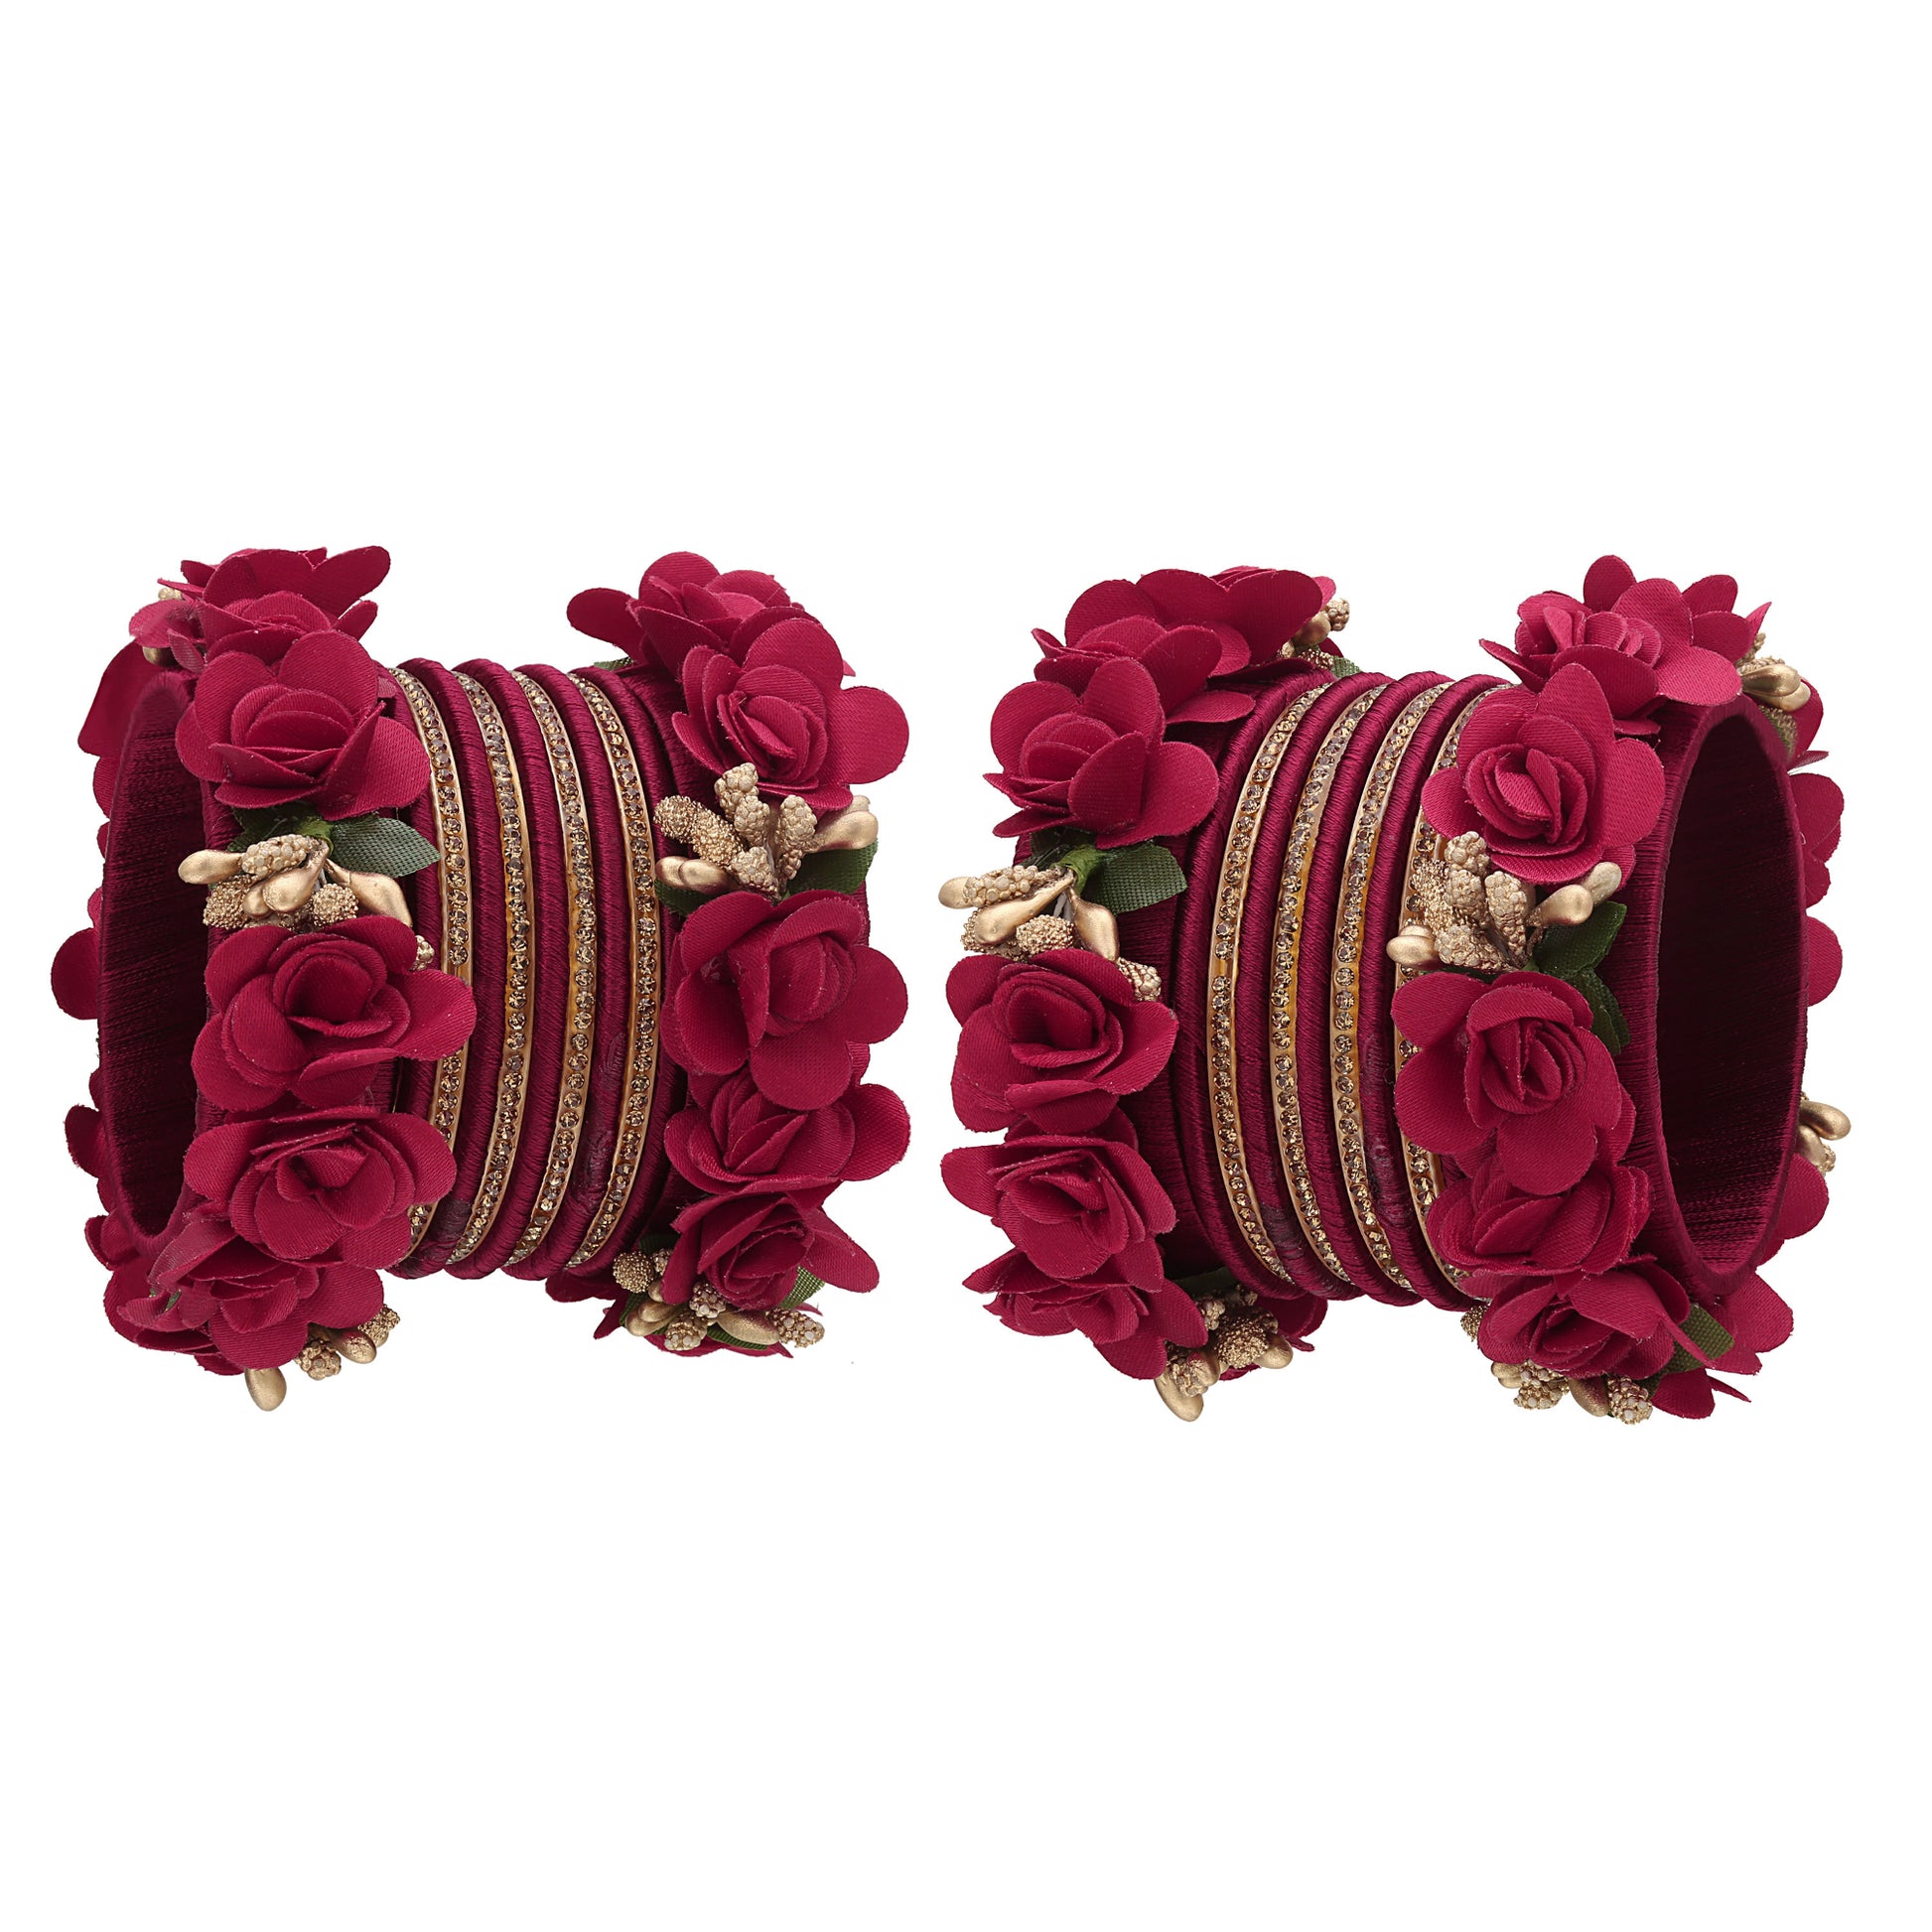 sukriti beautiful handcrafted maroon flower designer silk thread bridal chuda wedding bangles for women – set of 22